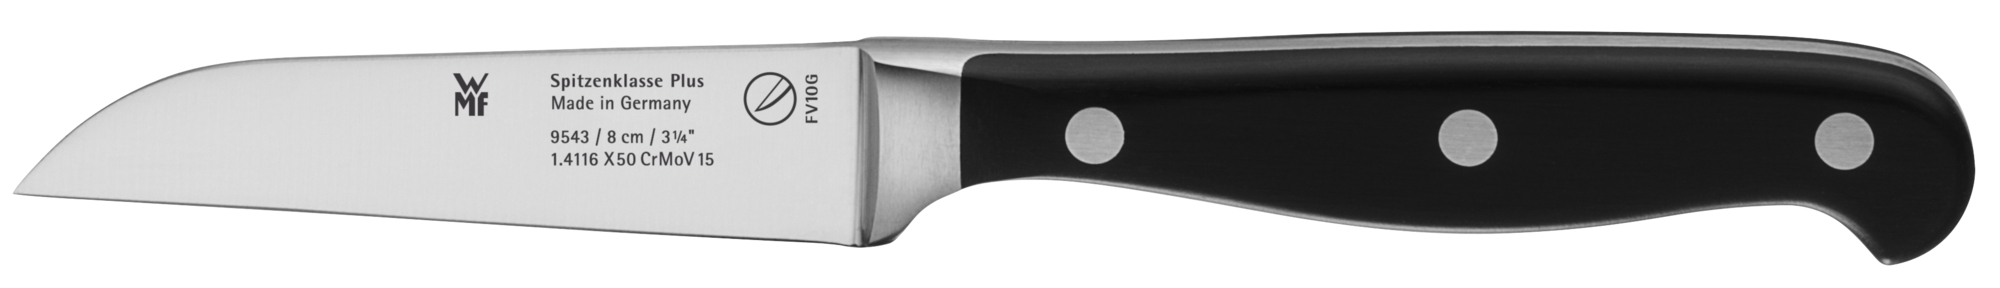 Овощной нож Spitzenklasse Plus 8 см нож для овощей regent inox длина 90 210 мм